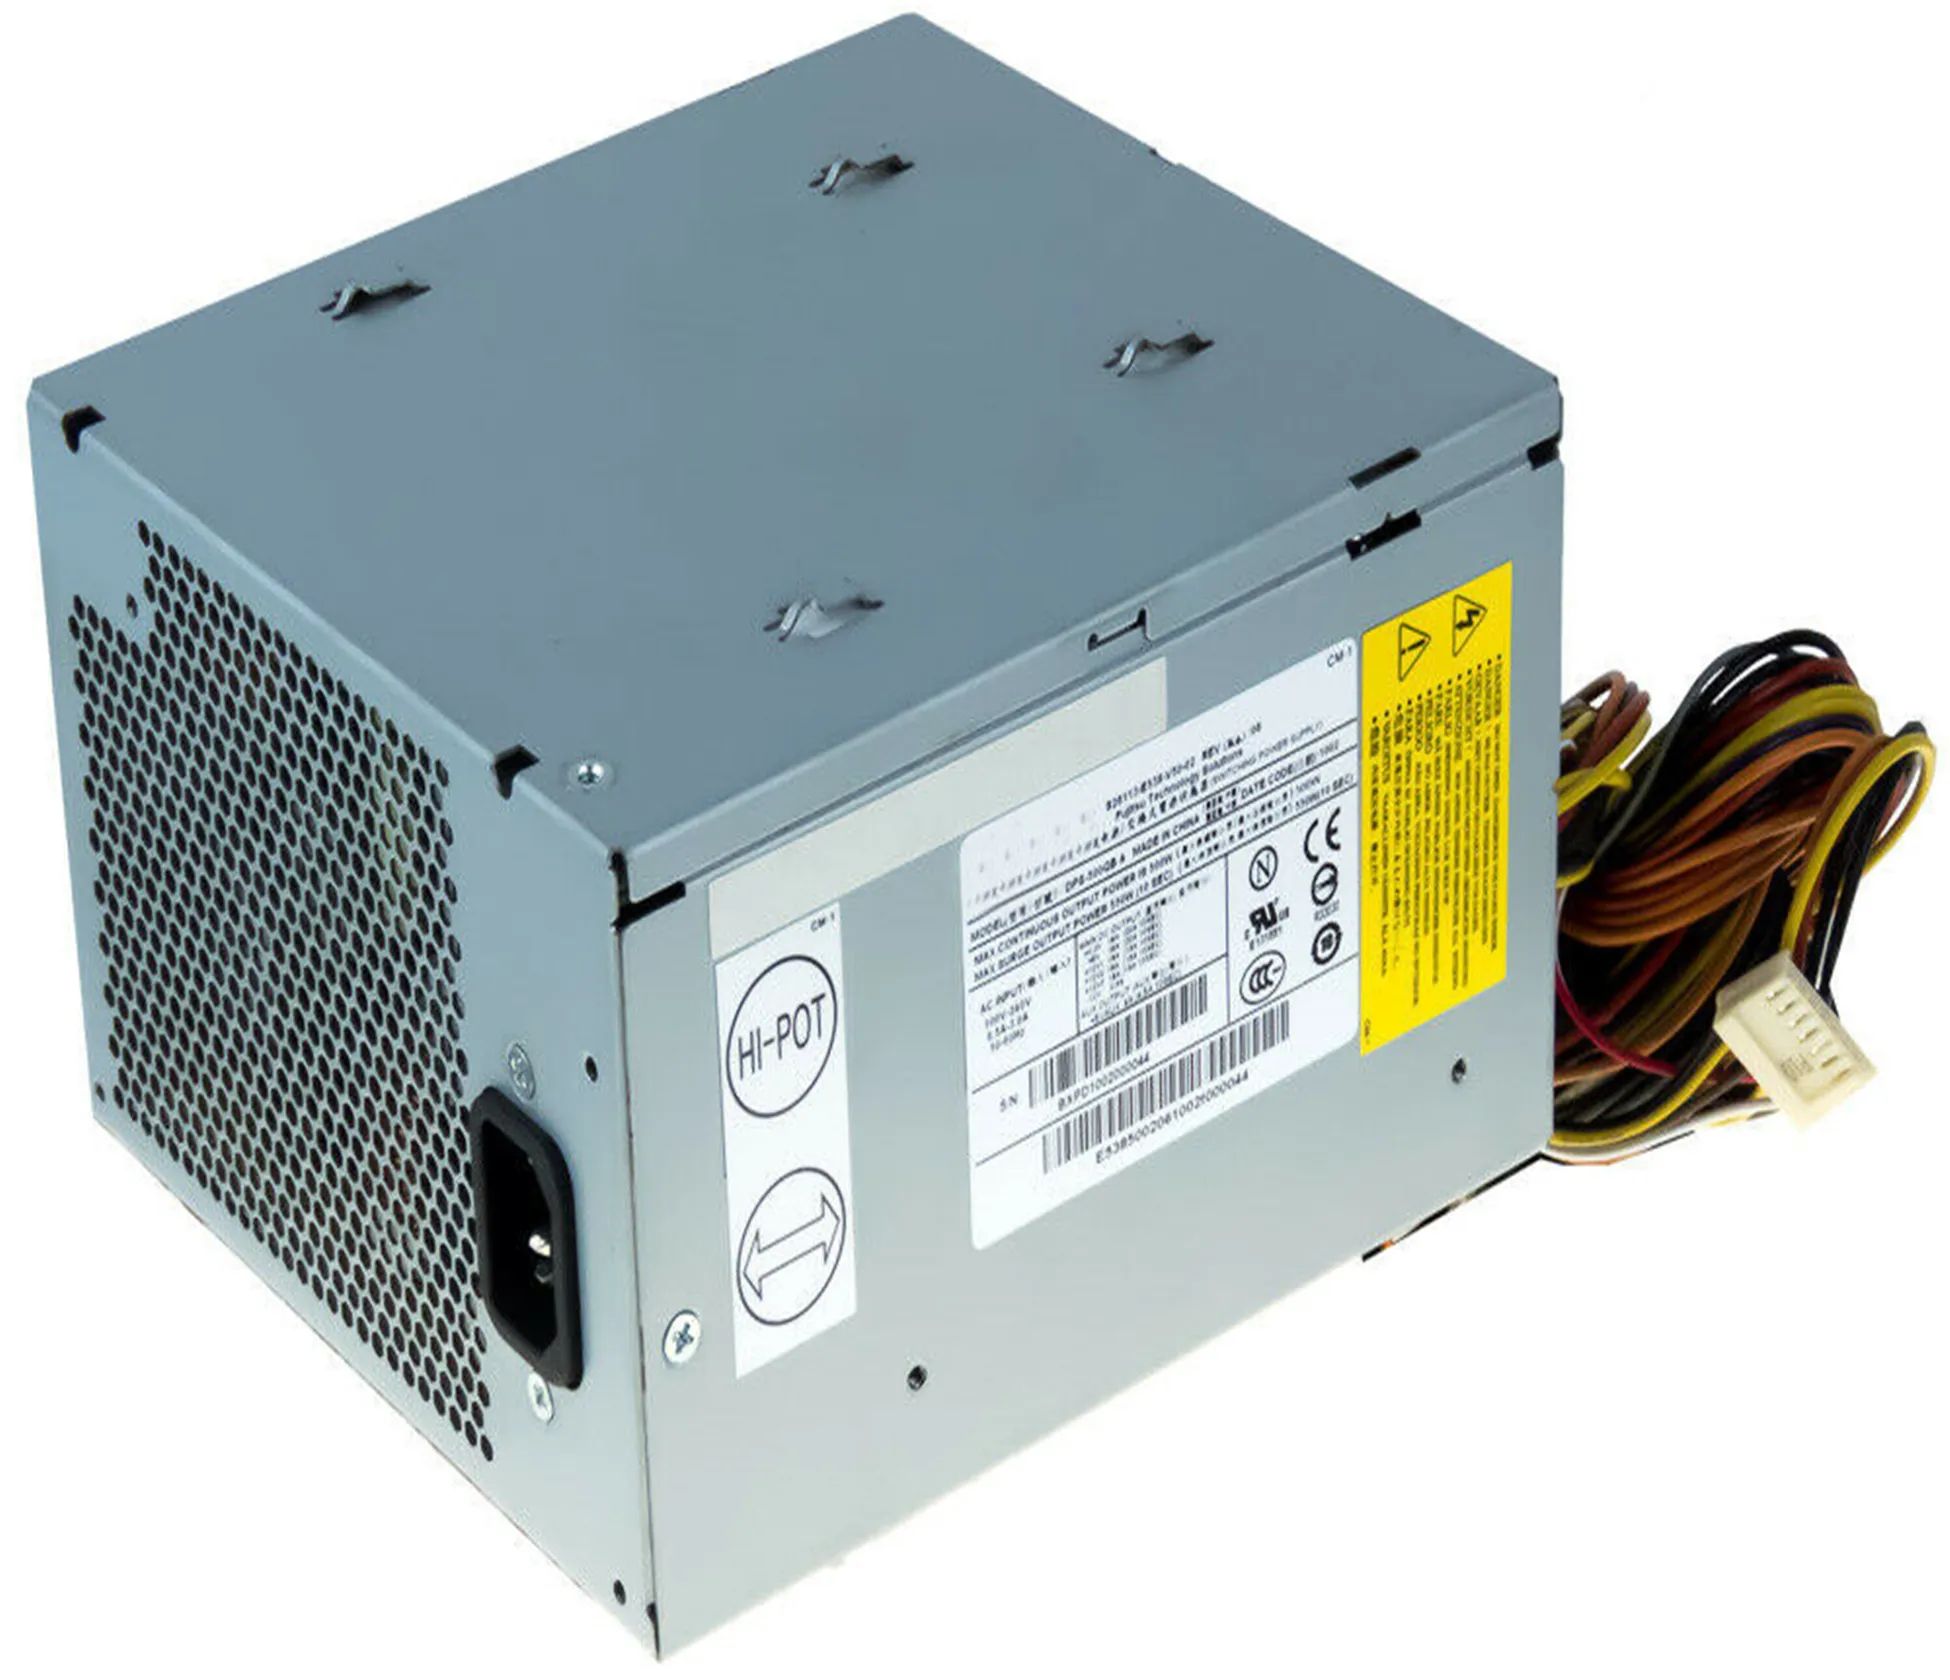 For Fujitsu S26113-E567-V50-02 DPS-500XB A 500W server power supply Fully tested